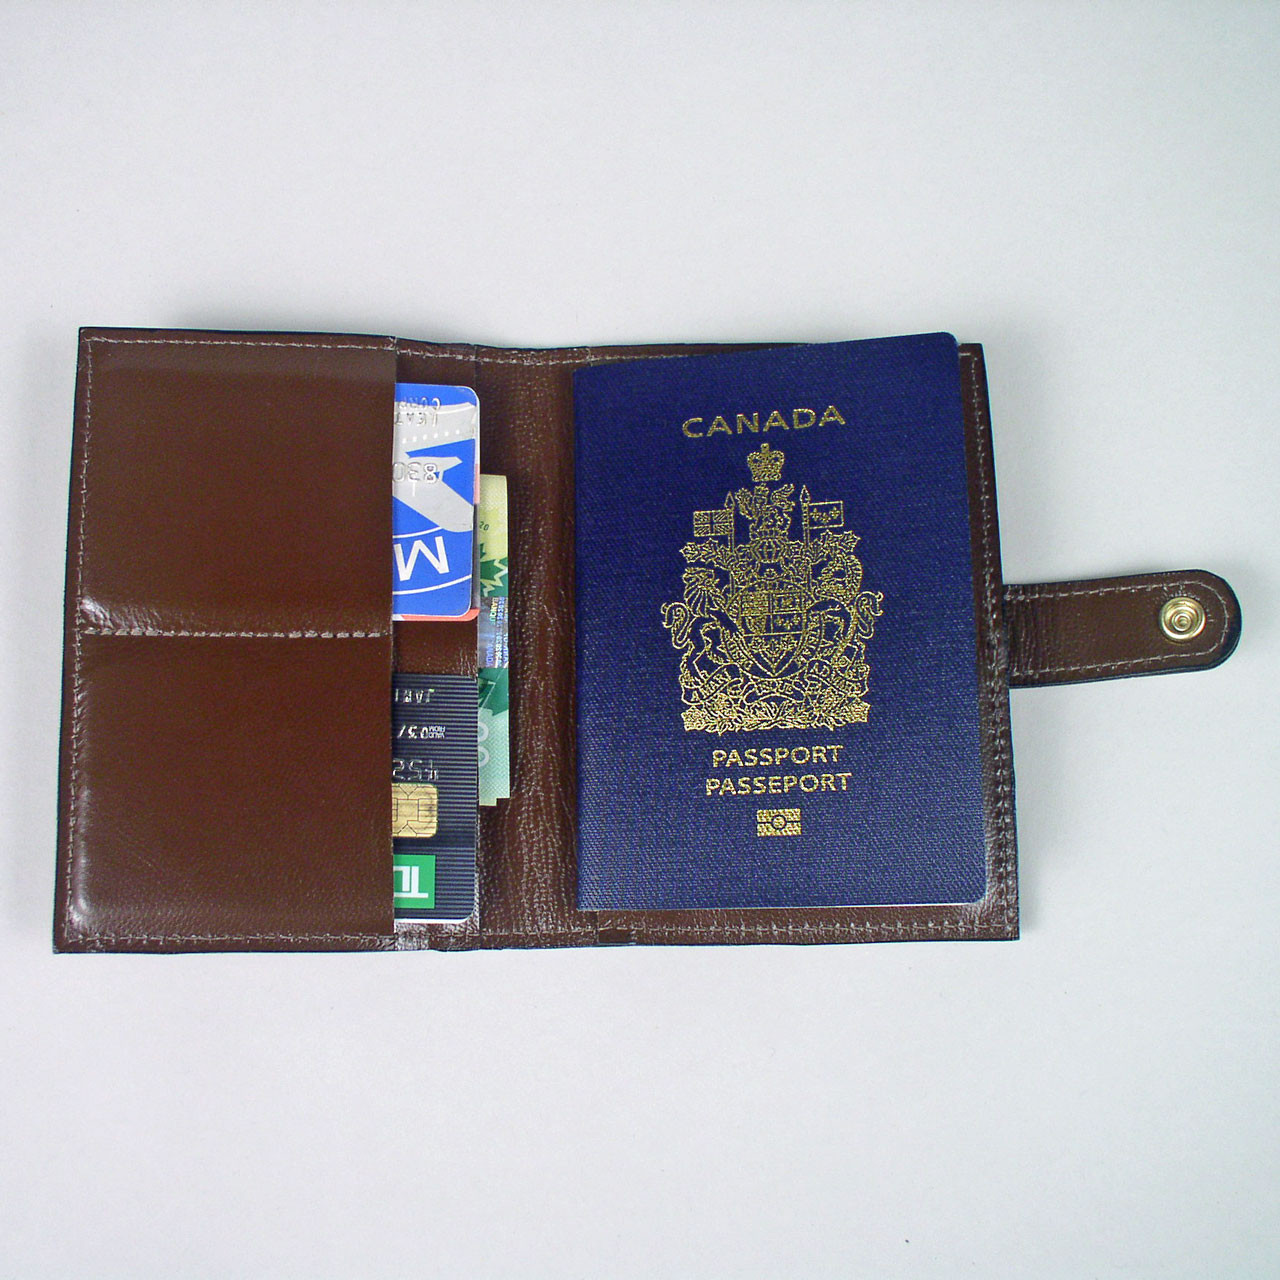 Luxury Passport Cover, Lace Passport Cover